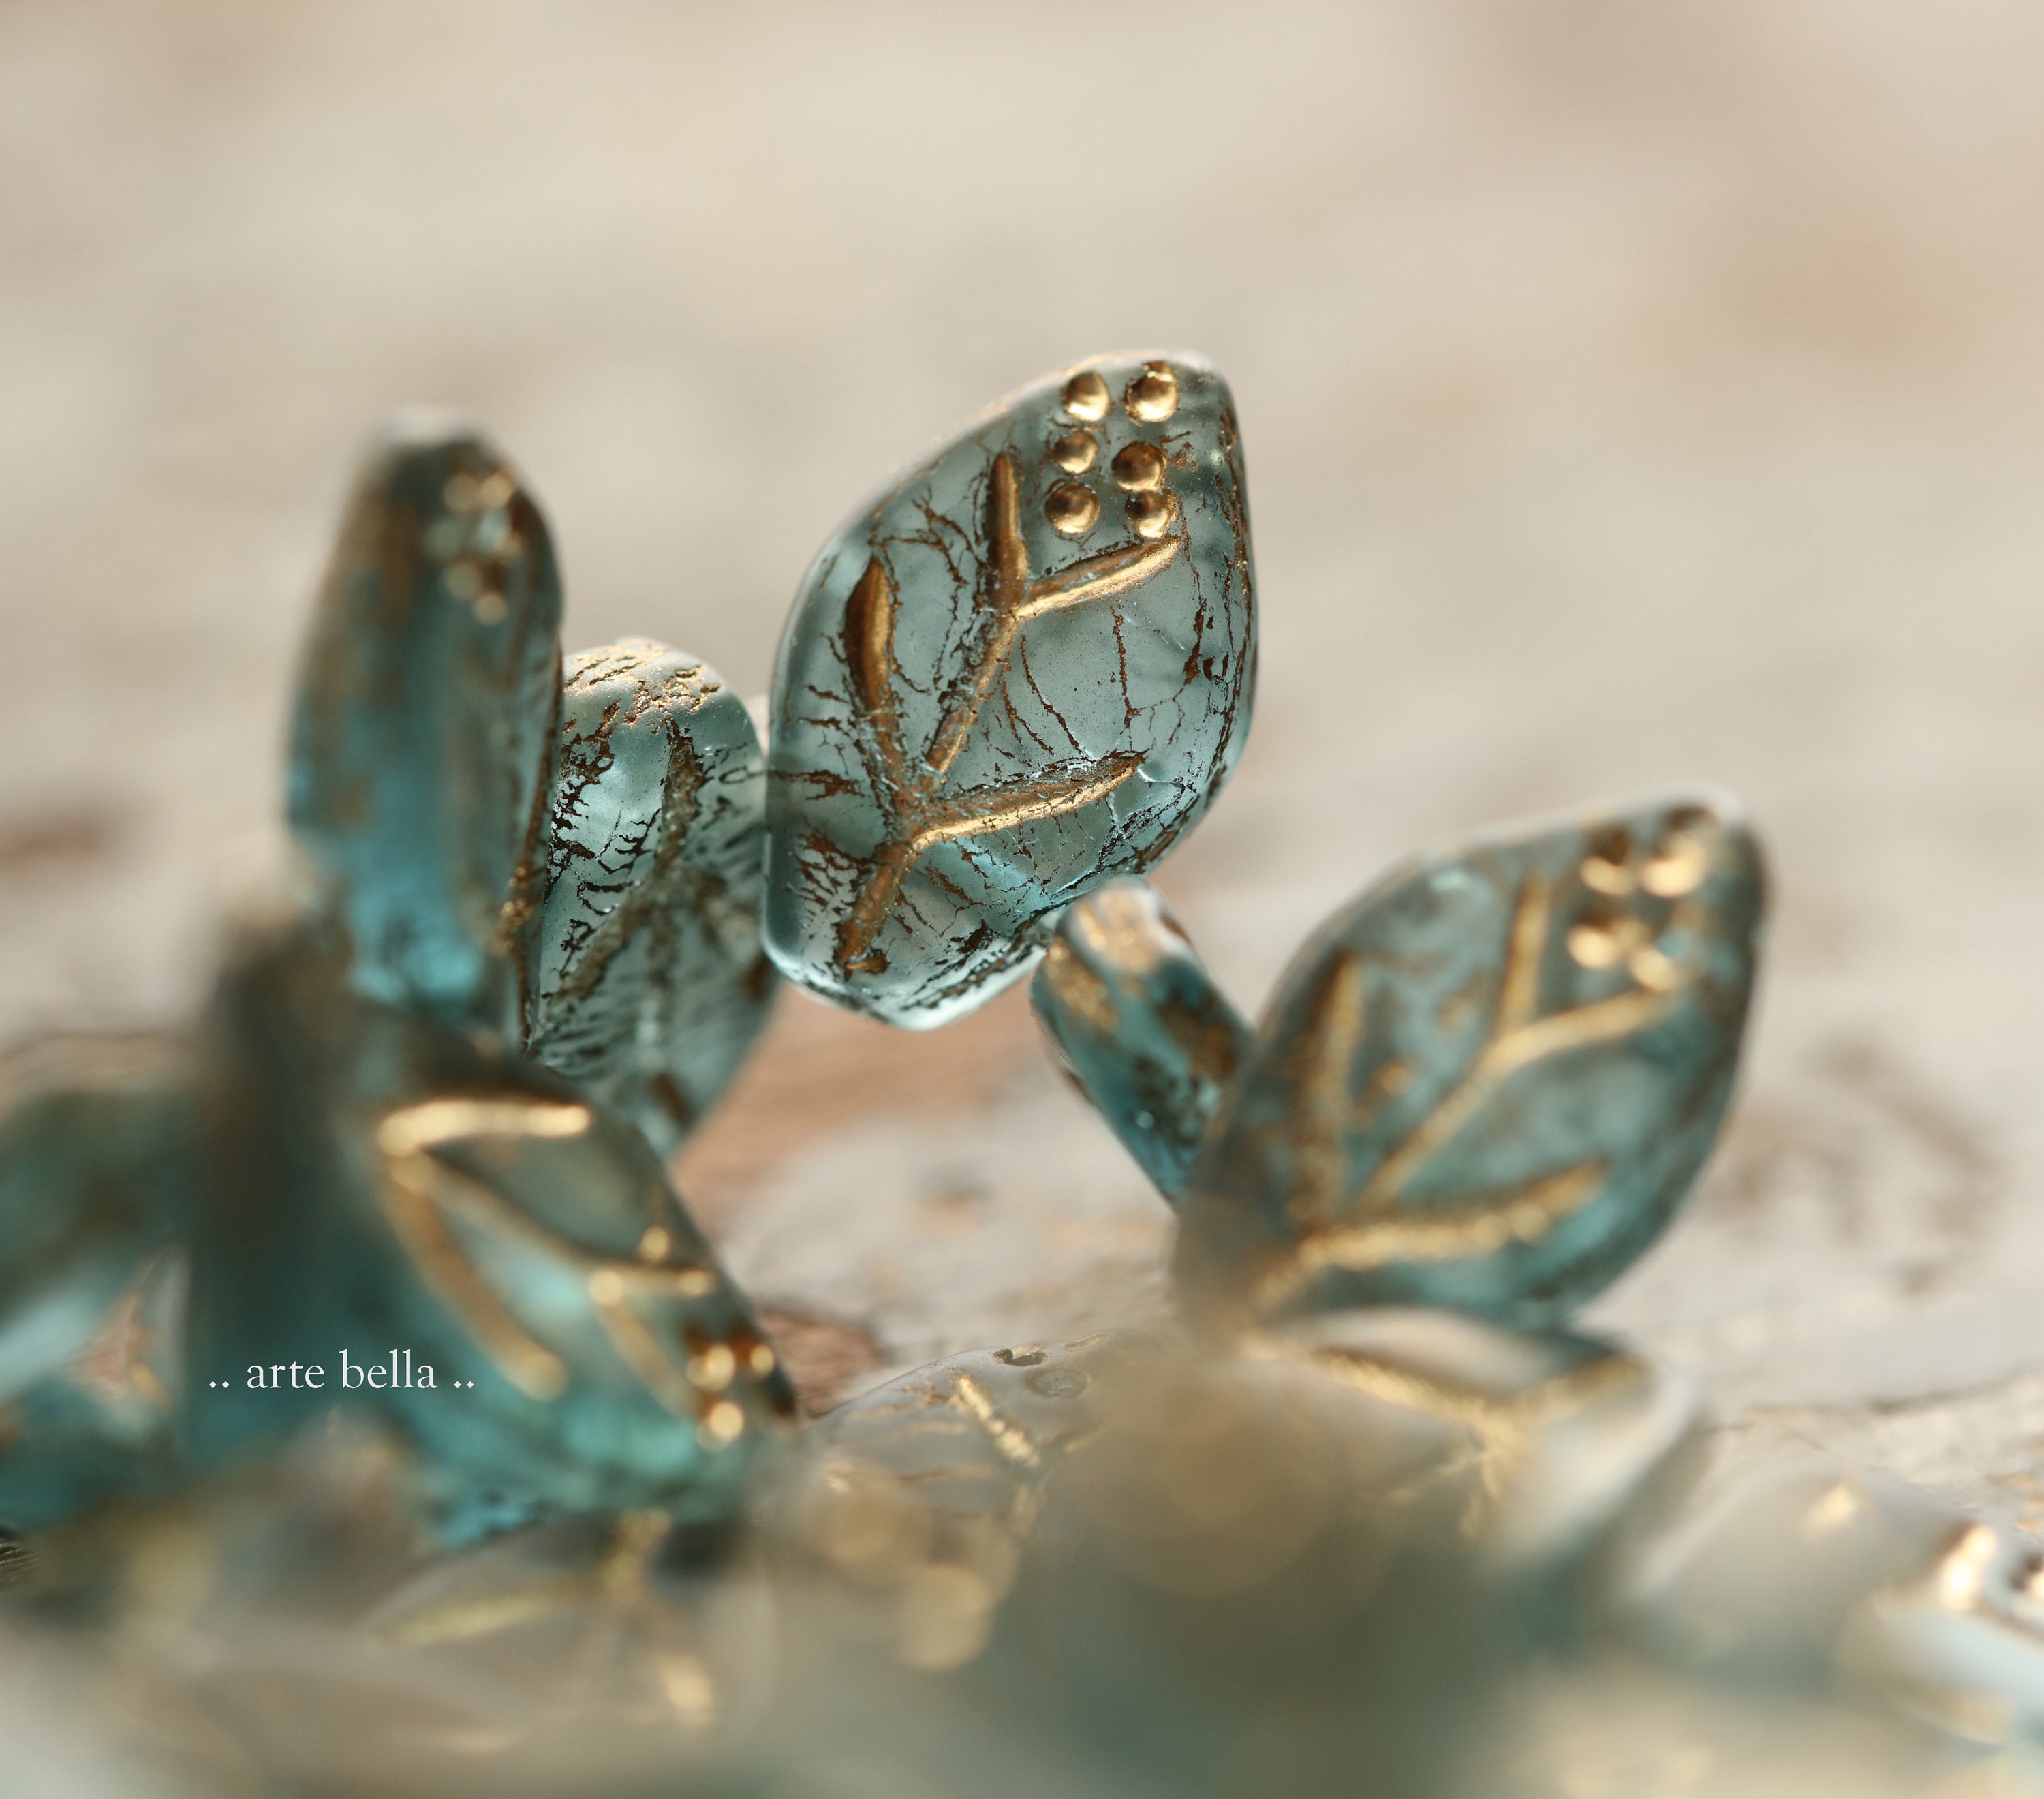 Glass Leaf Beads